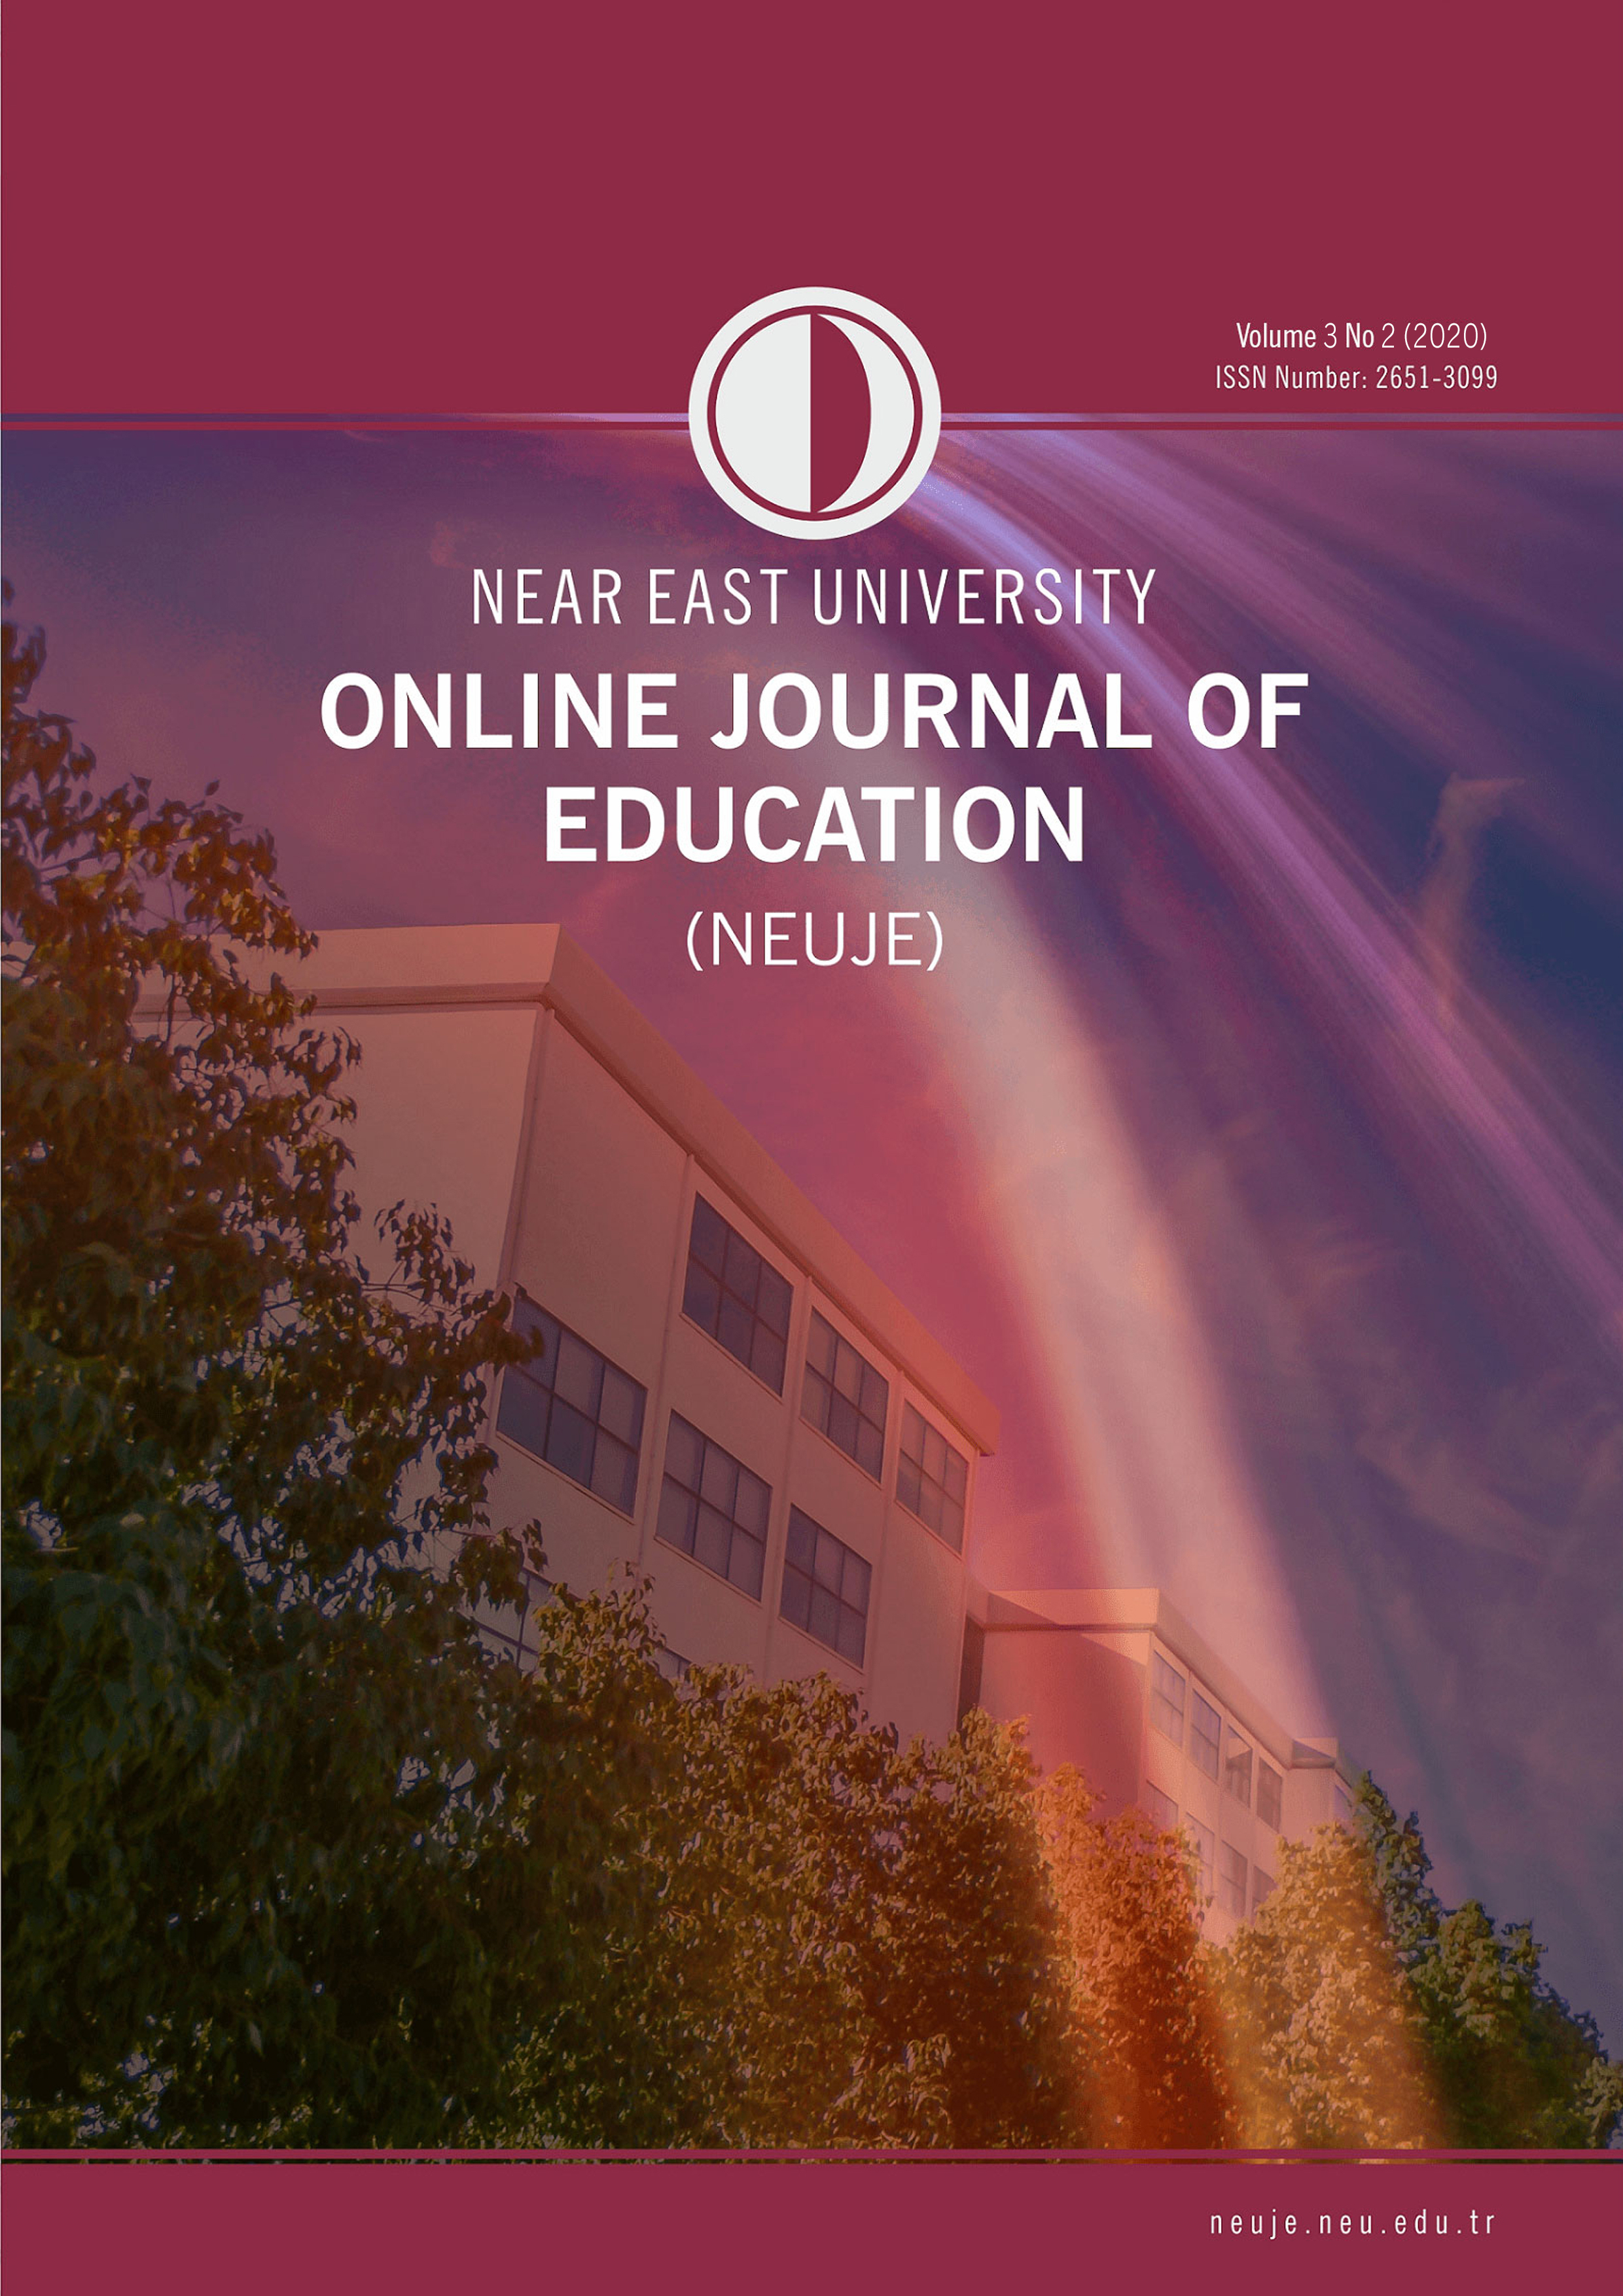 					View Vol. 3 No. 2 (2020): Near East University Online Journal of Education - NEUJE
				